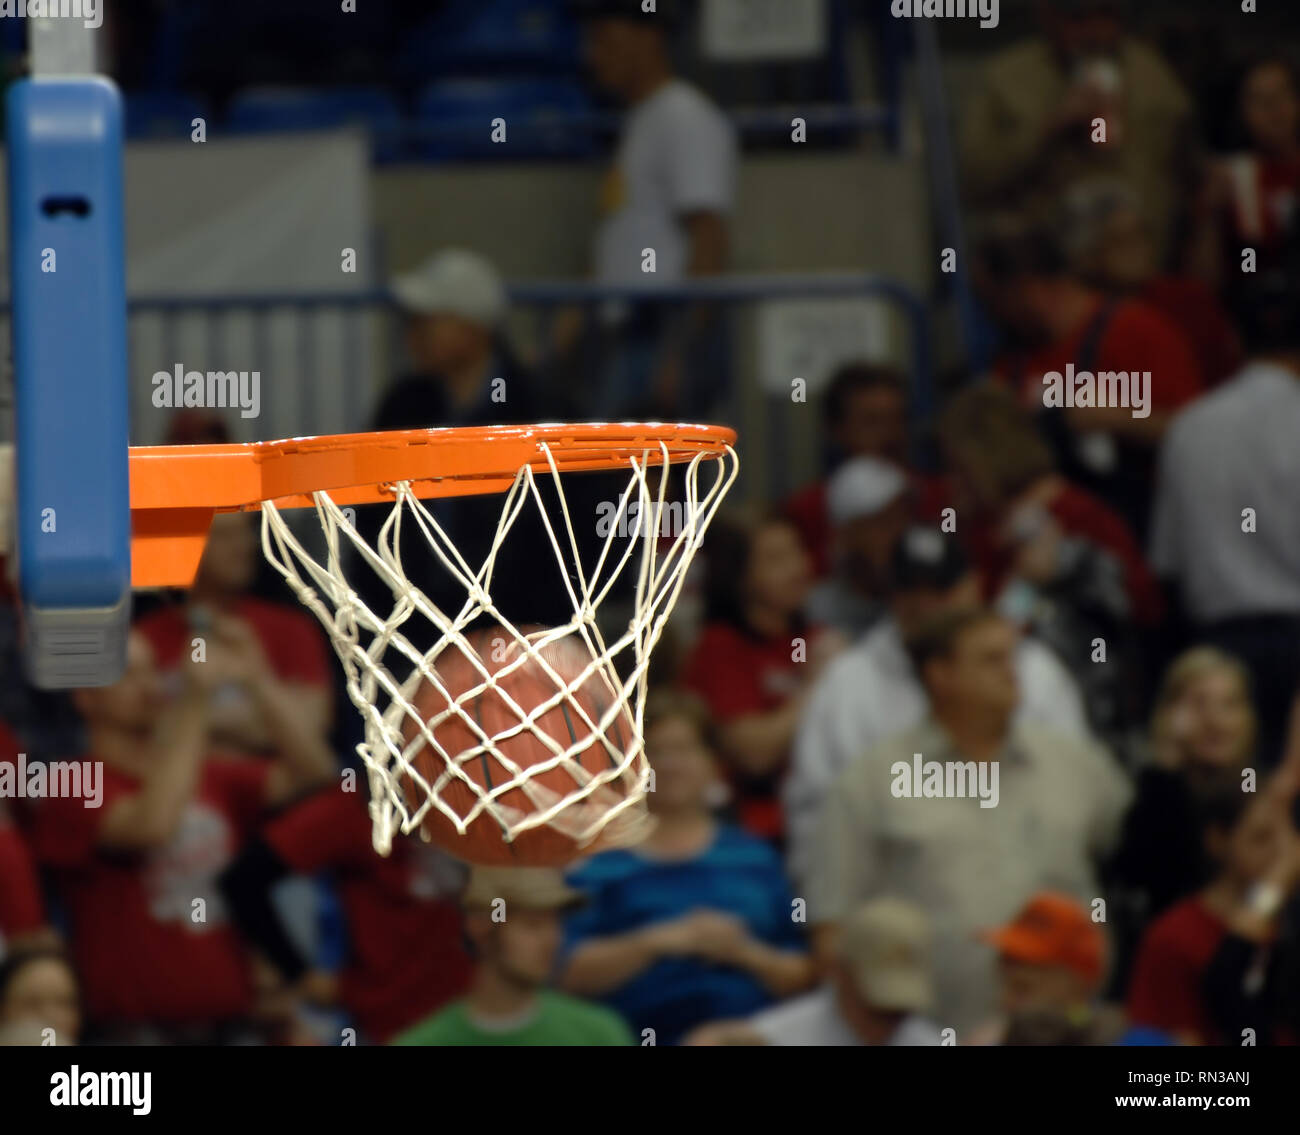 Basketball swooshes through a basketball hoop during a basketball